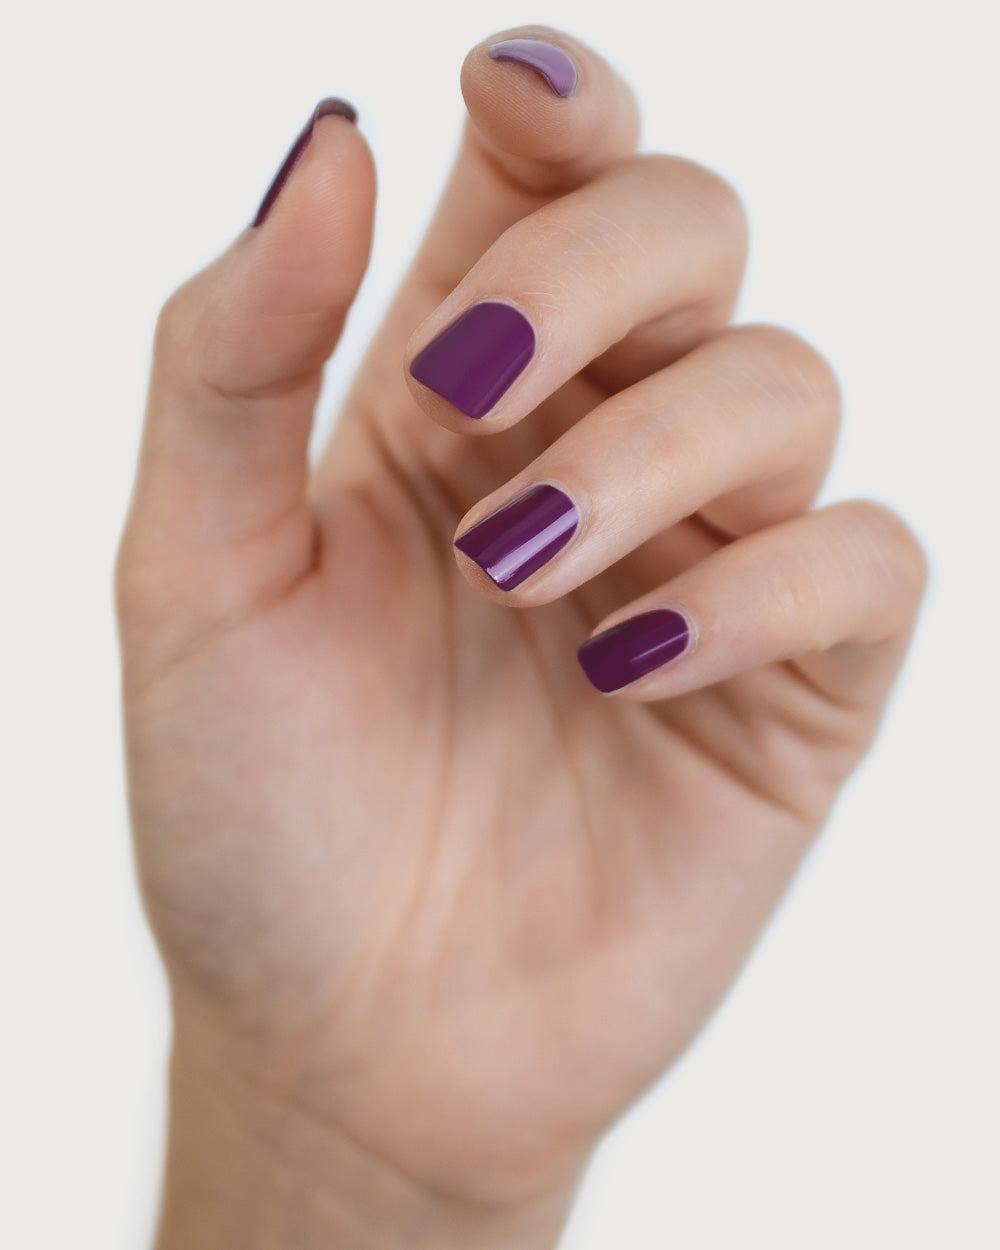 Reverence Violet Grape Crème nail polish by Sienna Byron Bay on fair skin tone hand.